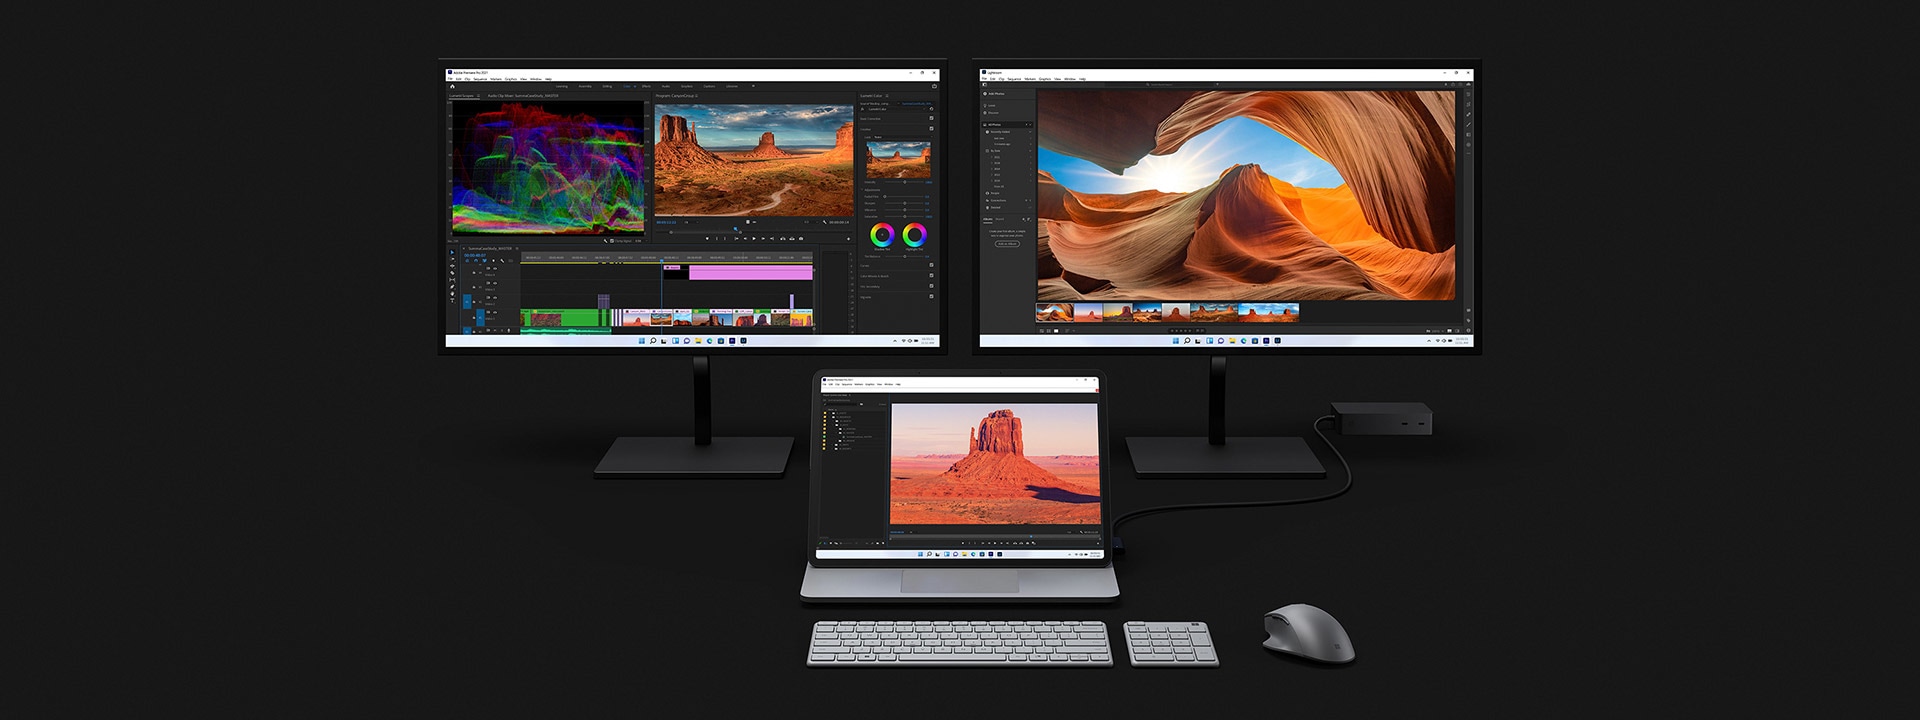 Surface Laptop Studio acoplado a dos monitores de gran tamaño y se usa para editar video.